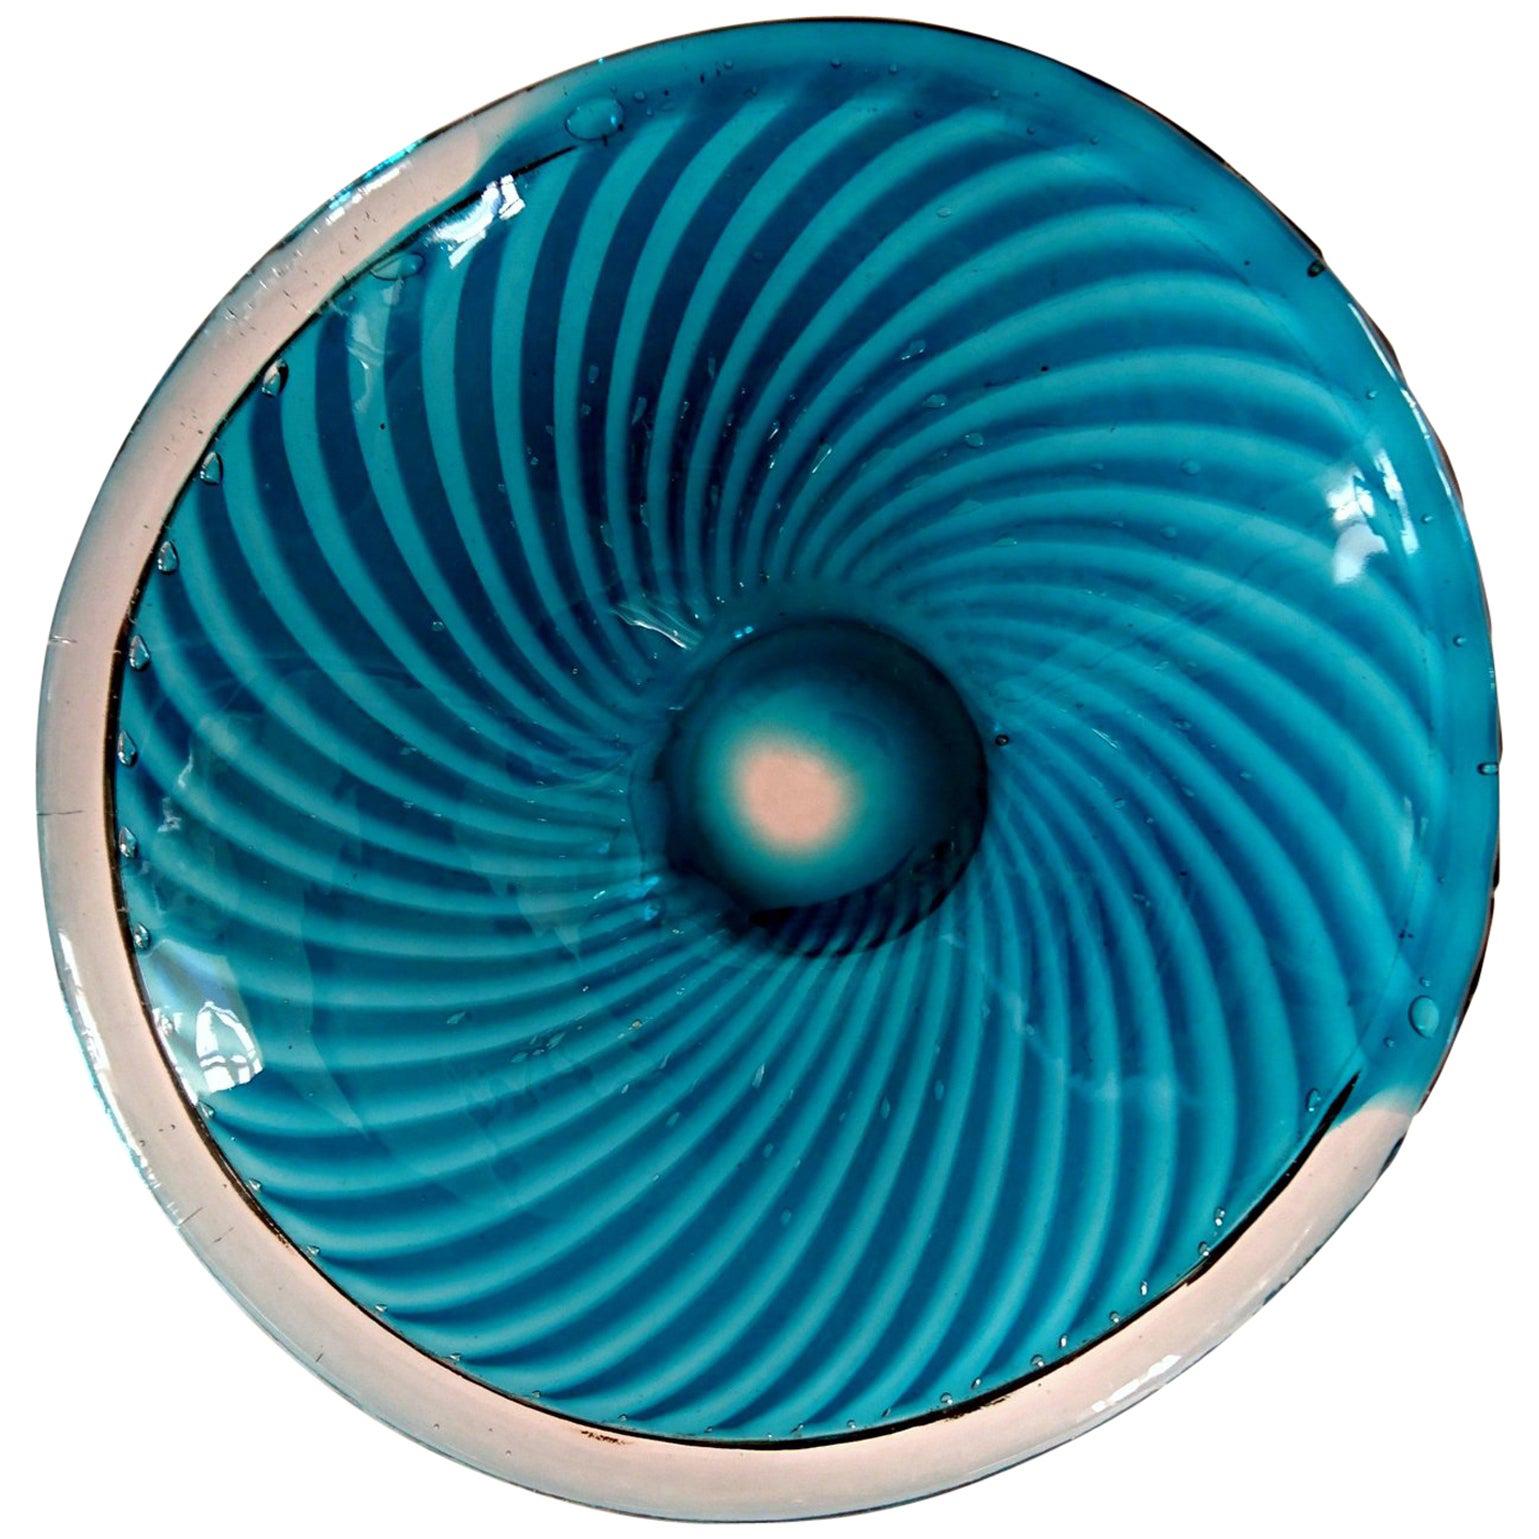 Midcentury Striped Glass Bowl by Gullaskruf, Sweden For Sale